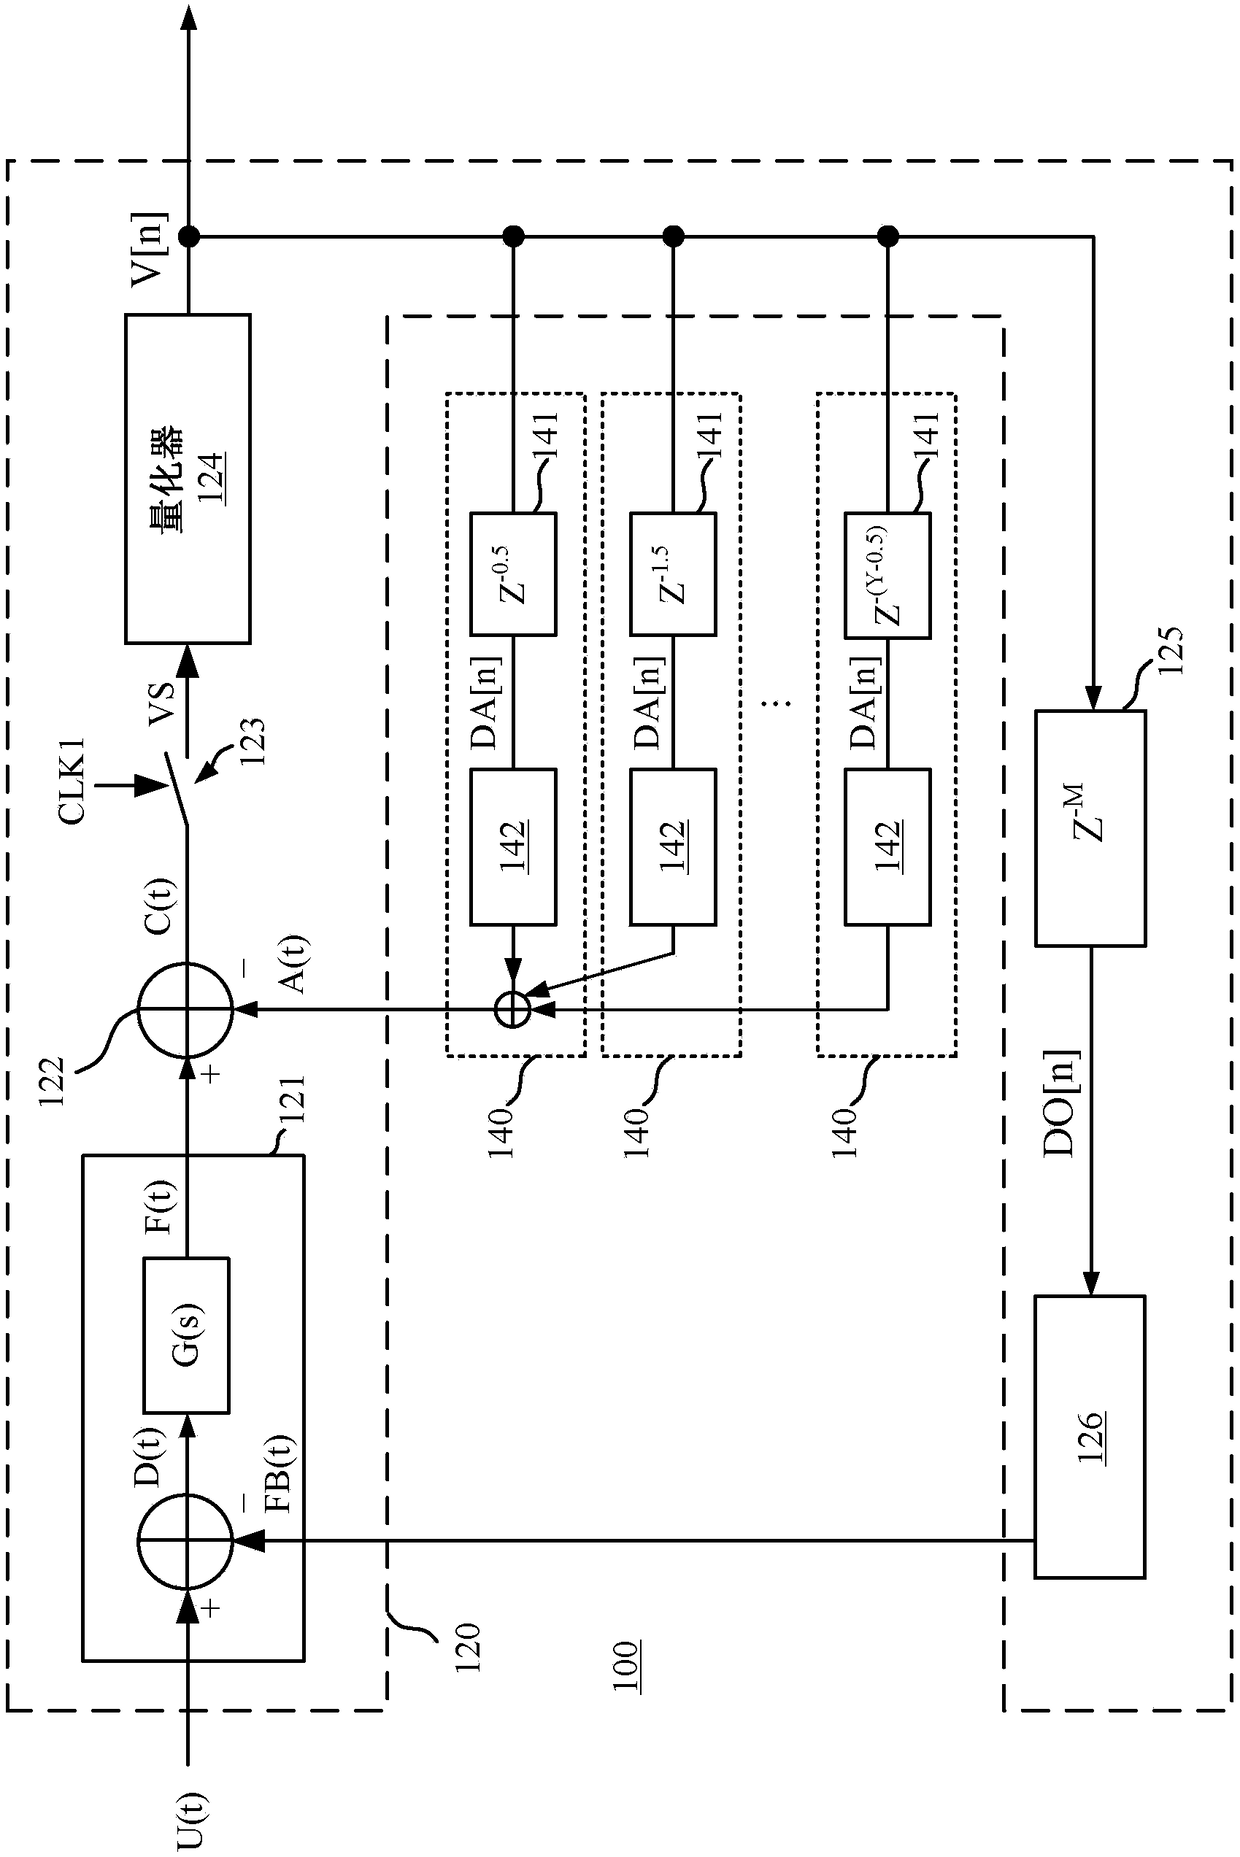 Delta-Sigma modulator and signal conversion method